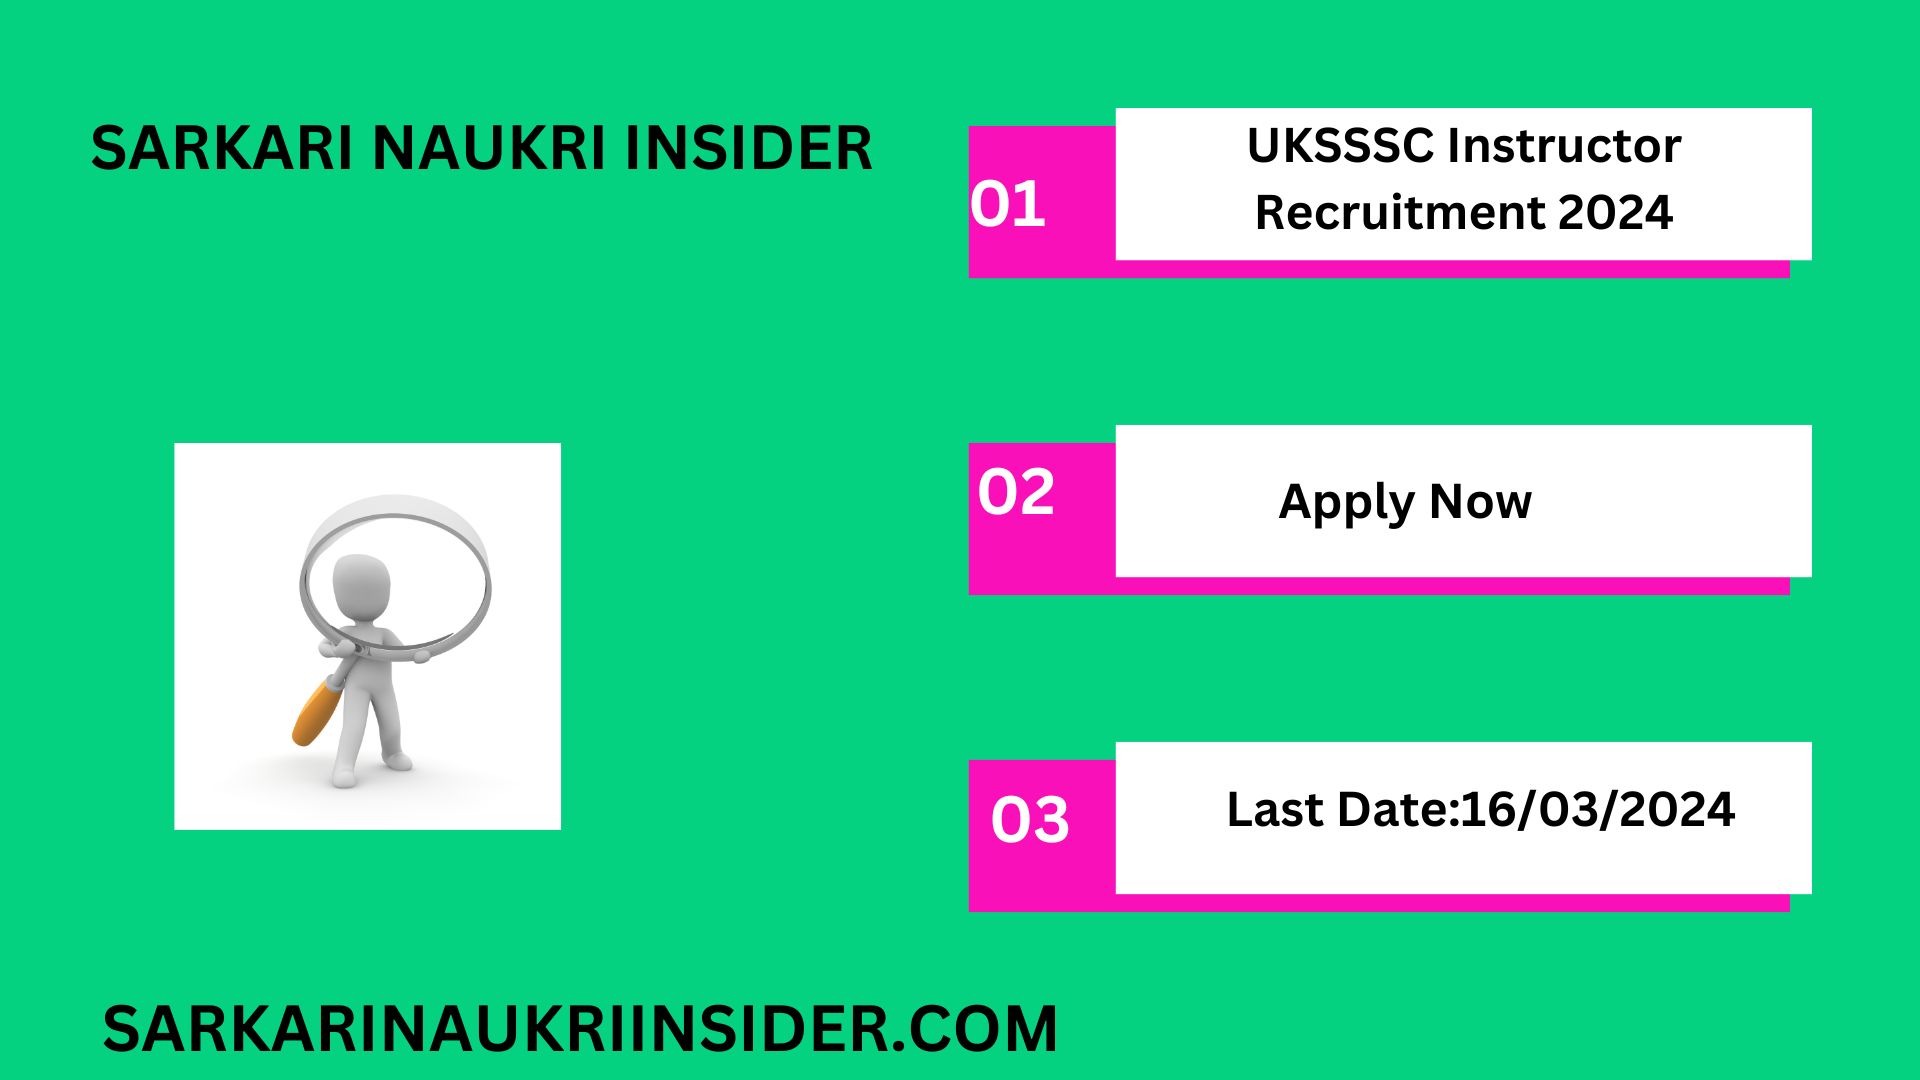 UKSSSC Instructor Recruitment 2024